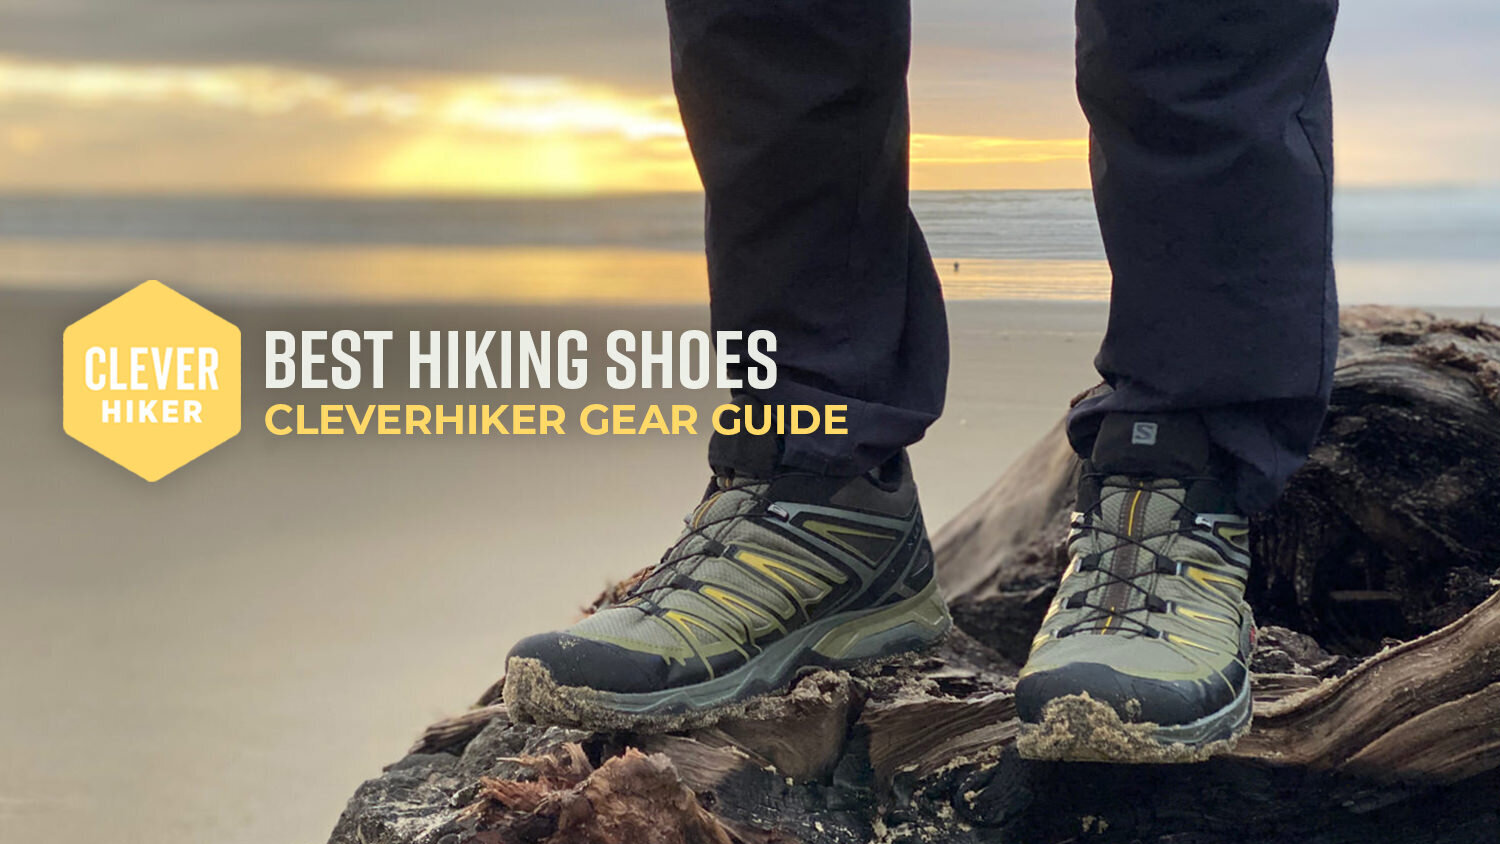 Women/'s Hiking Walking Outdoor Adventurous Summer Athtletic Water Shoes//Sandals